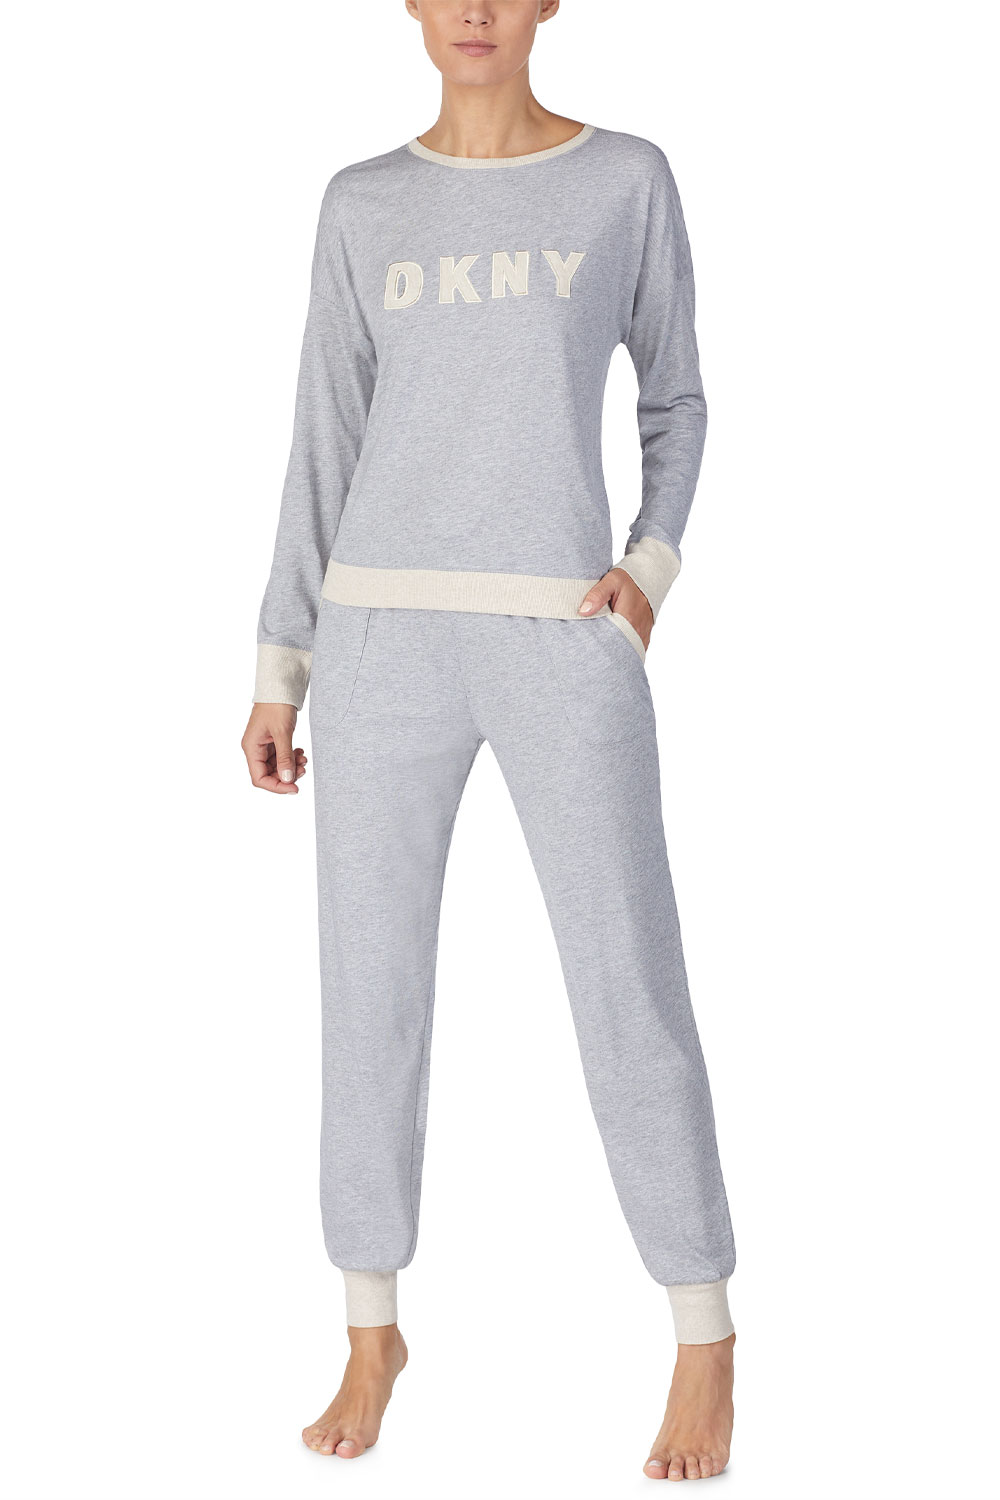 DKNY Top & Jogger Set New Signature 40 grau günstig online kaufen